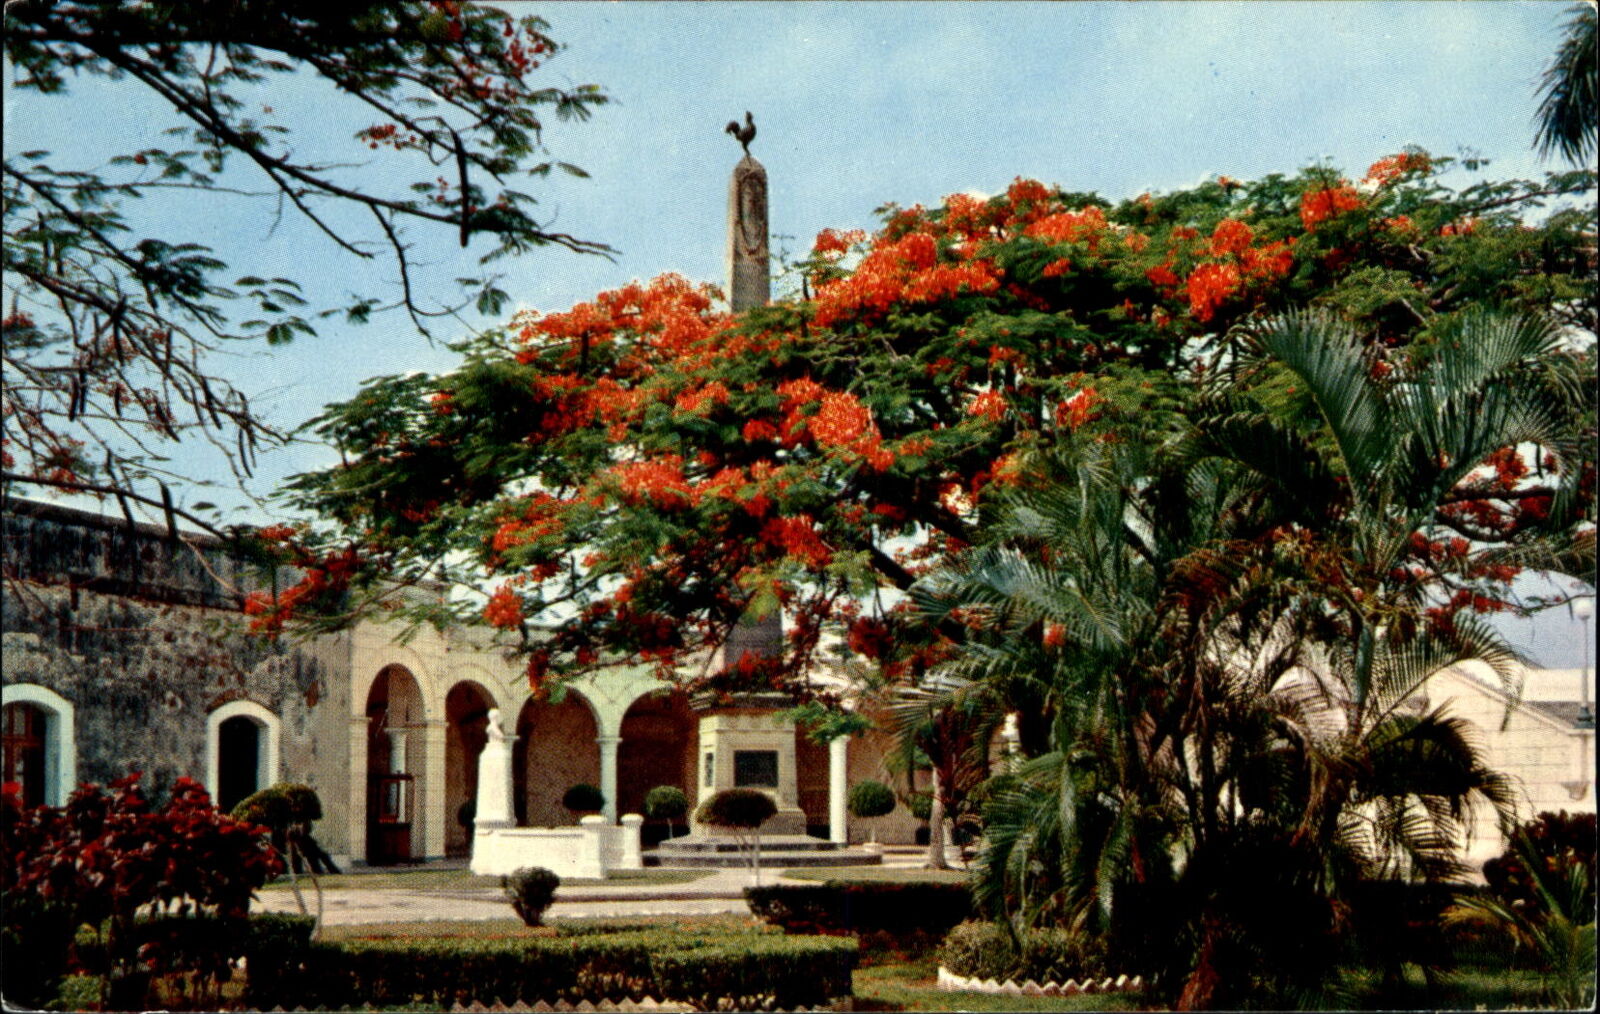 Plaza de Francia ~ Republic of Panama